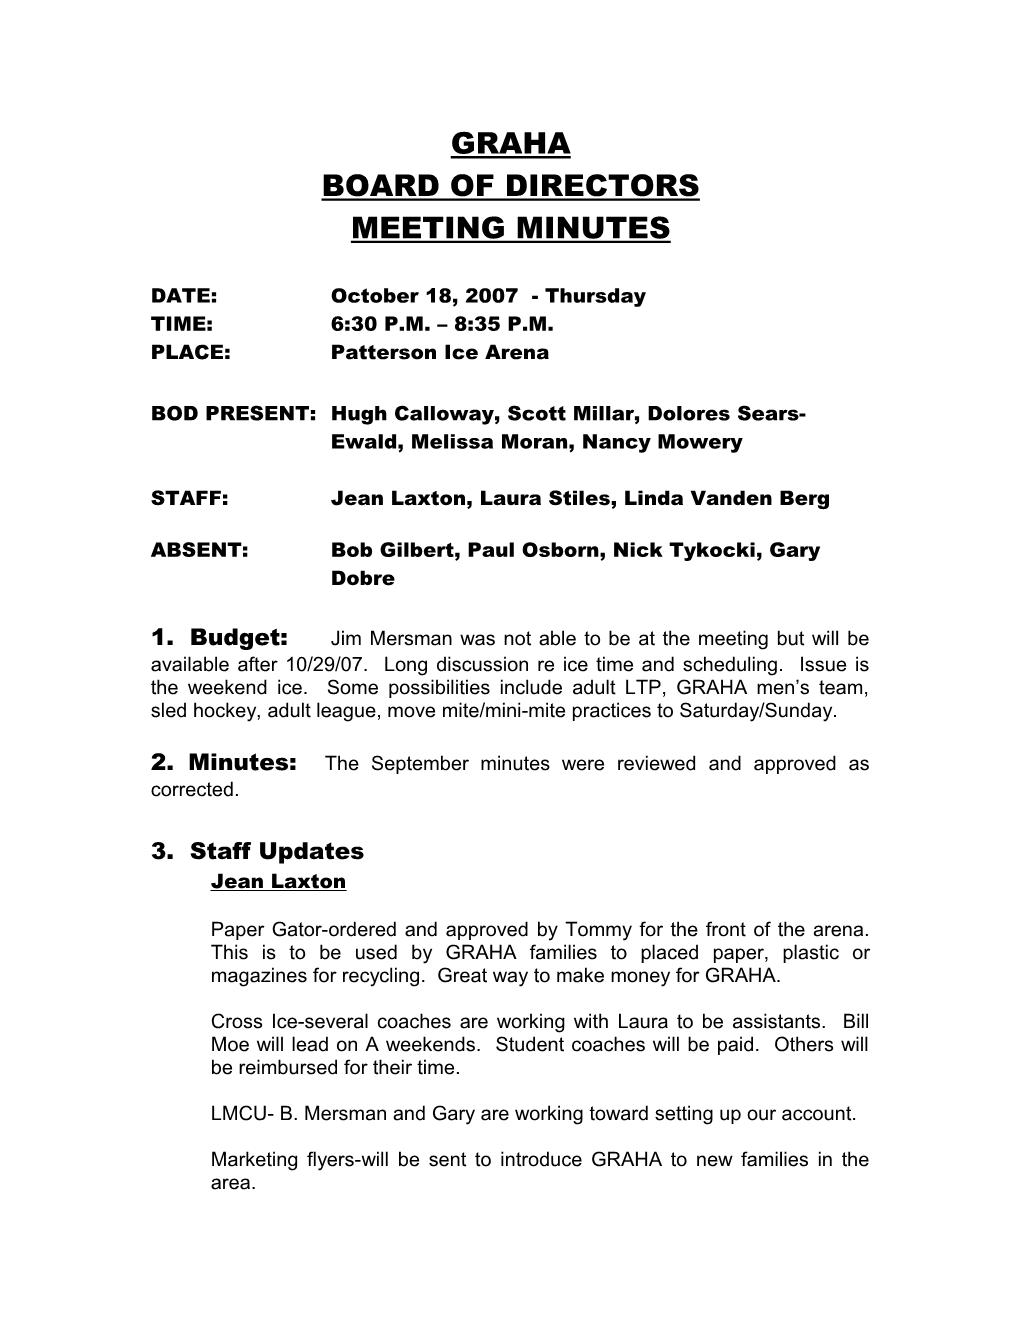 Board of Directors s10